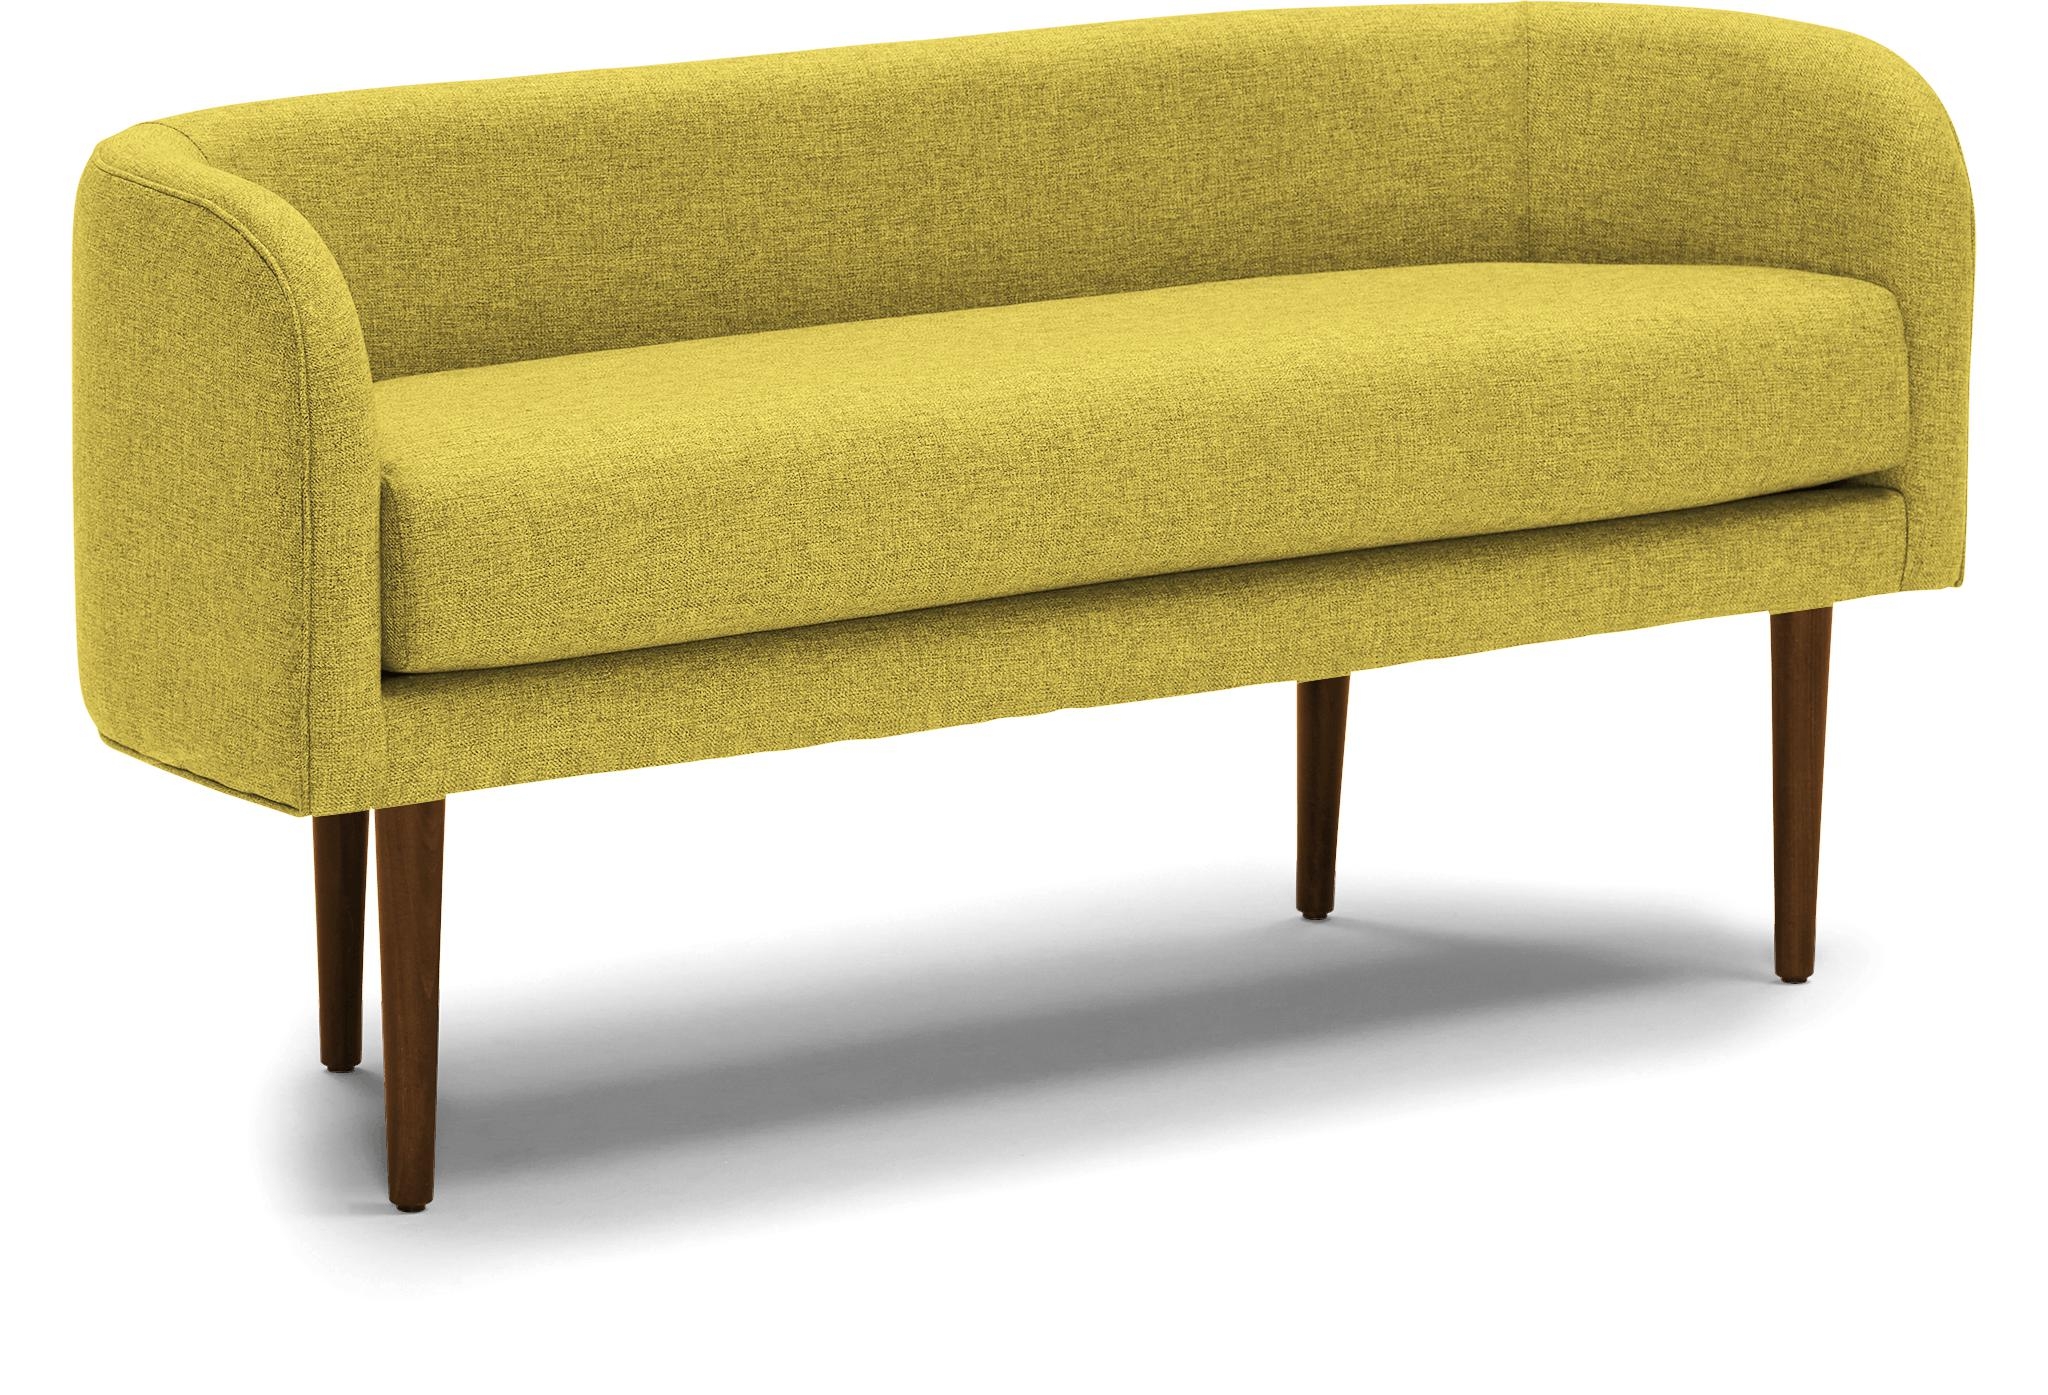 Yellow Elsie Mid Century Modern Bench - Taylor Golden - Mocha - Image 1